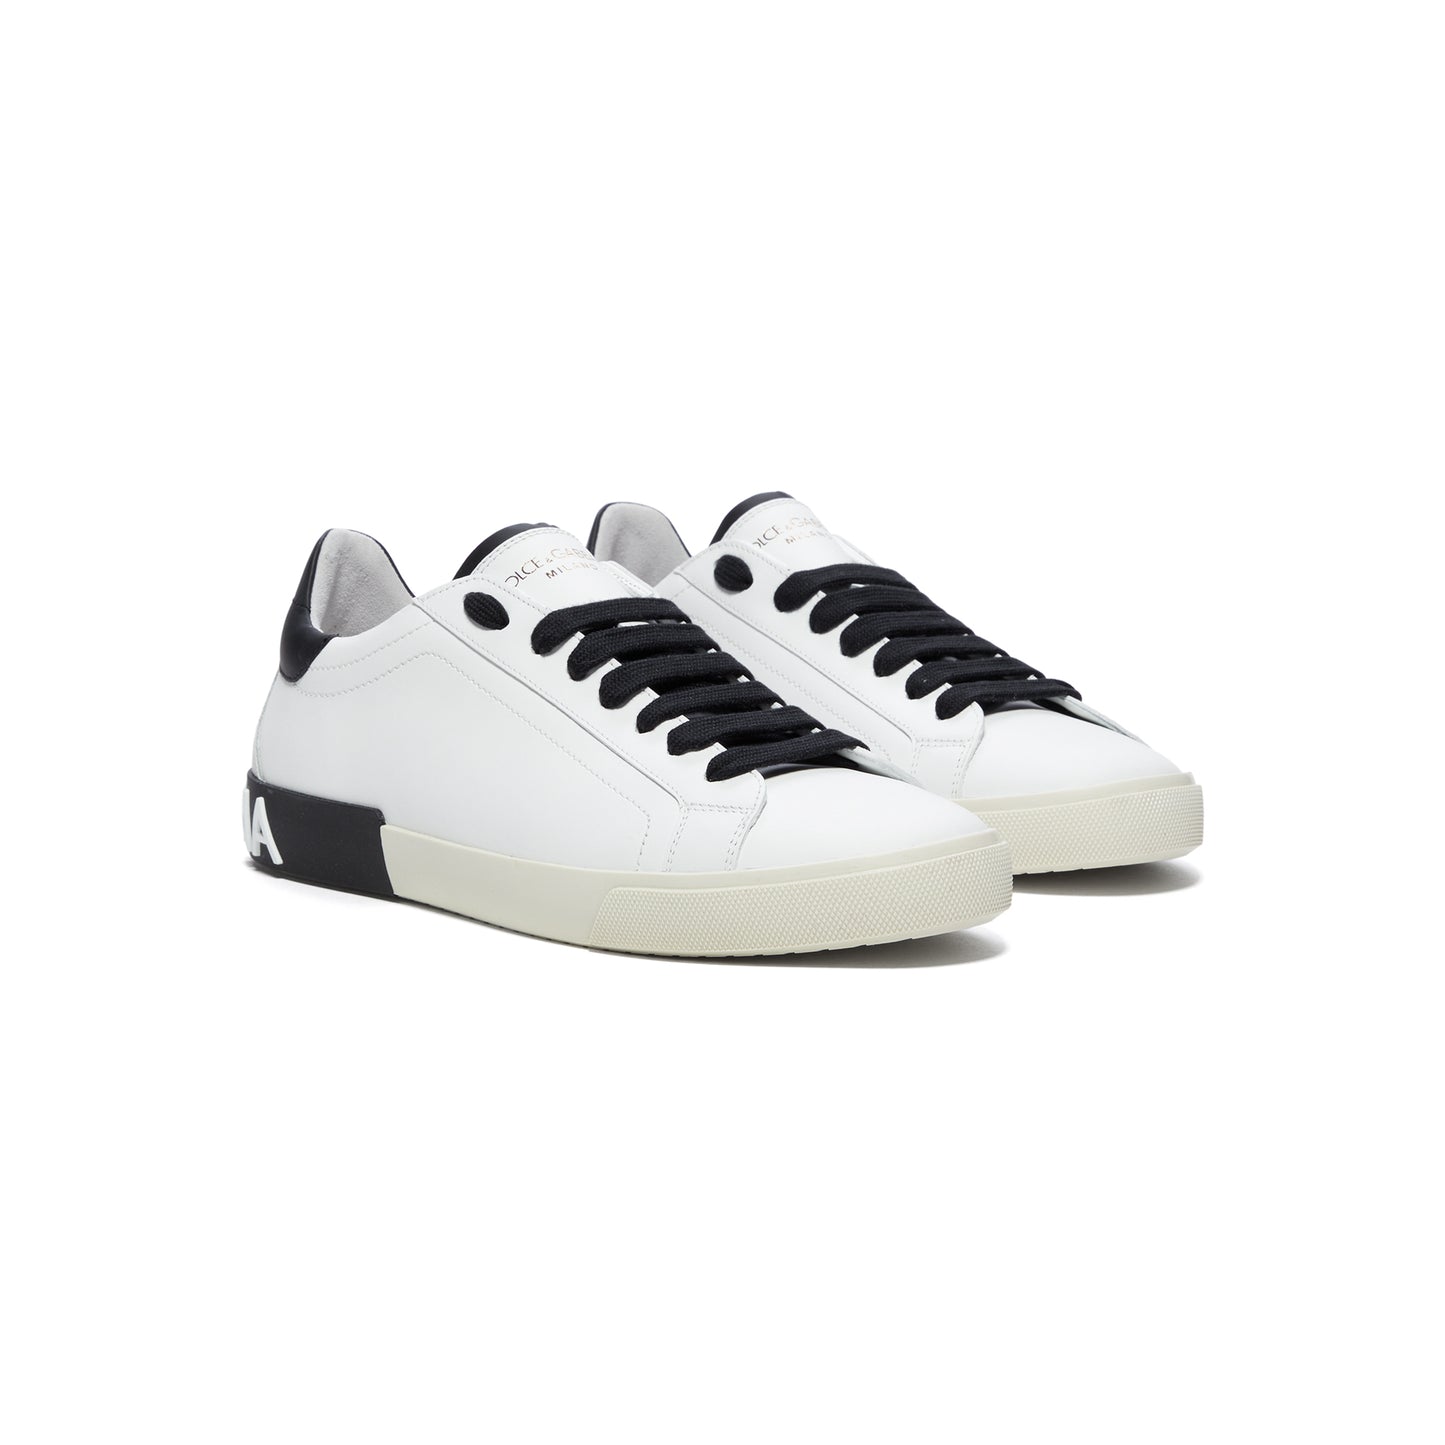 Dolce & Gabbana Low-Top Sneakers (Bianco/Nero)